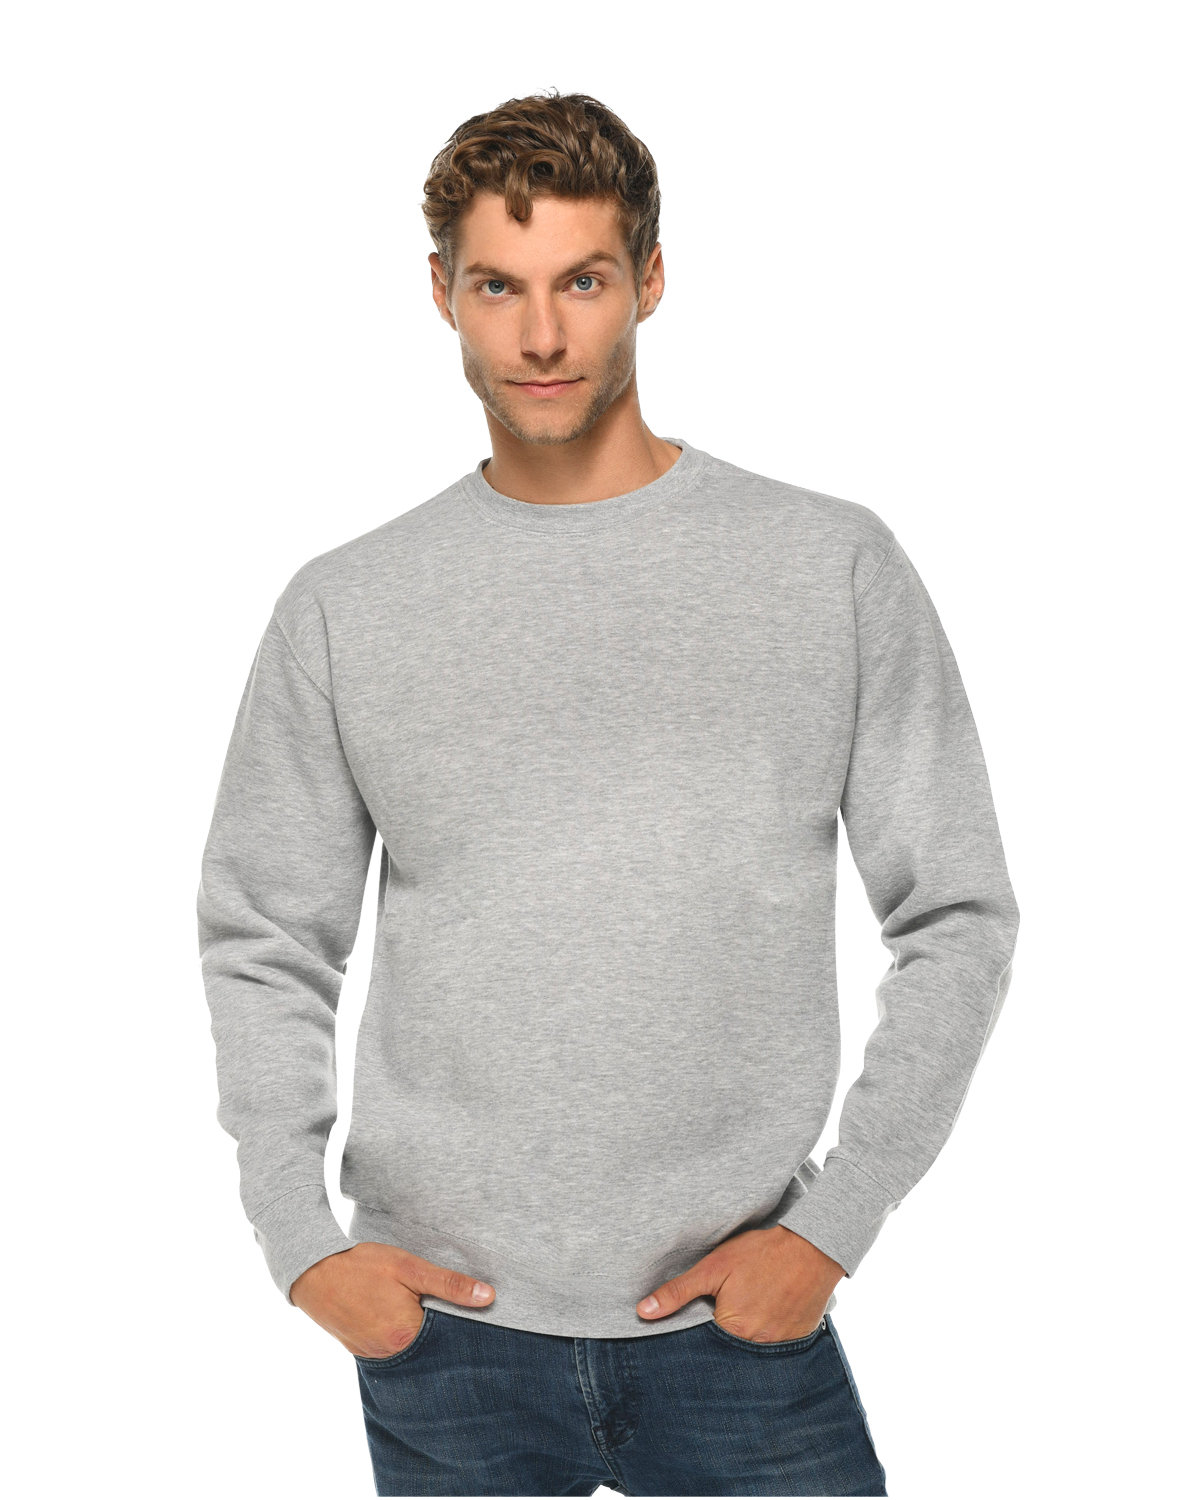 Lane Seven Unisex Premium Crewneck Sweatshirt HEATHER GREY 